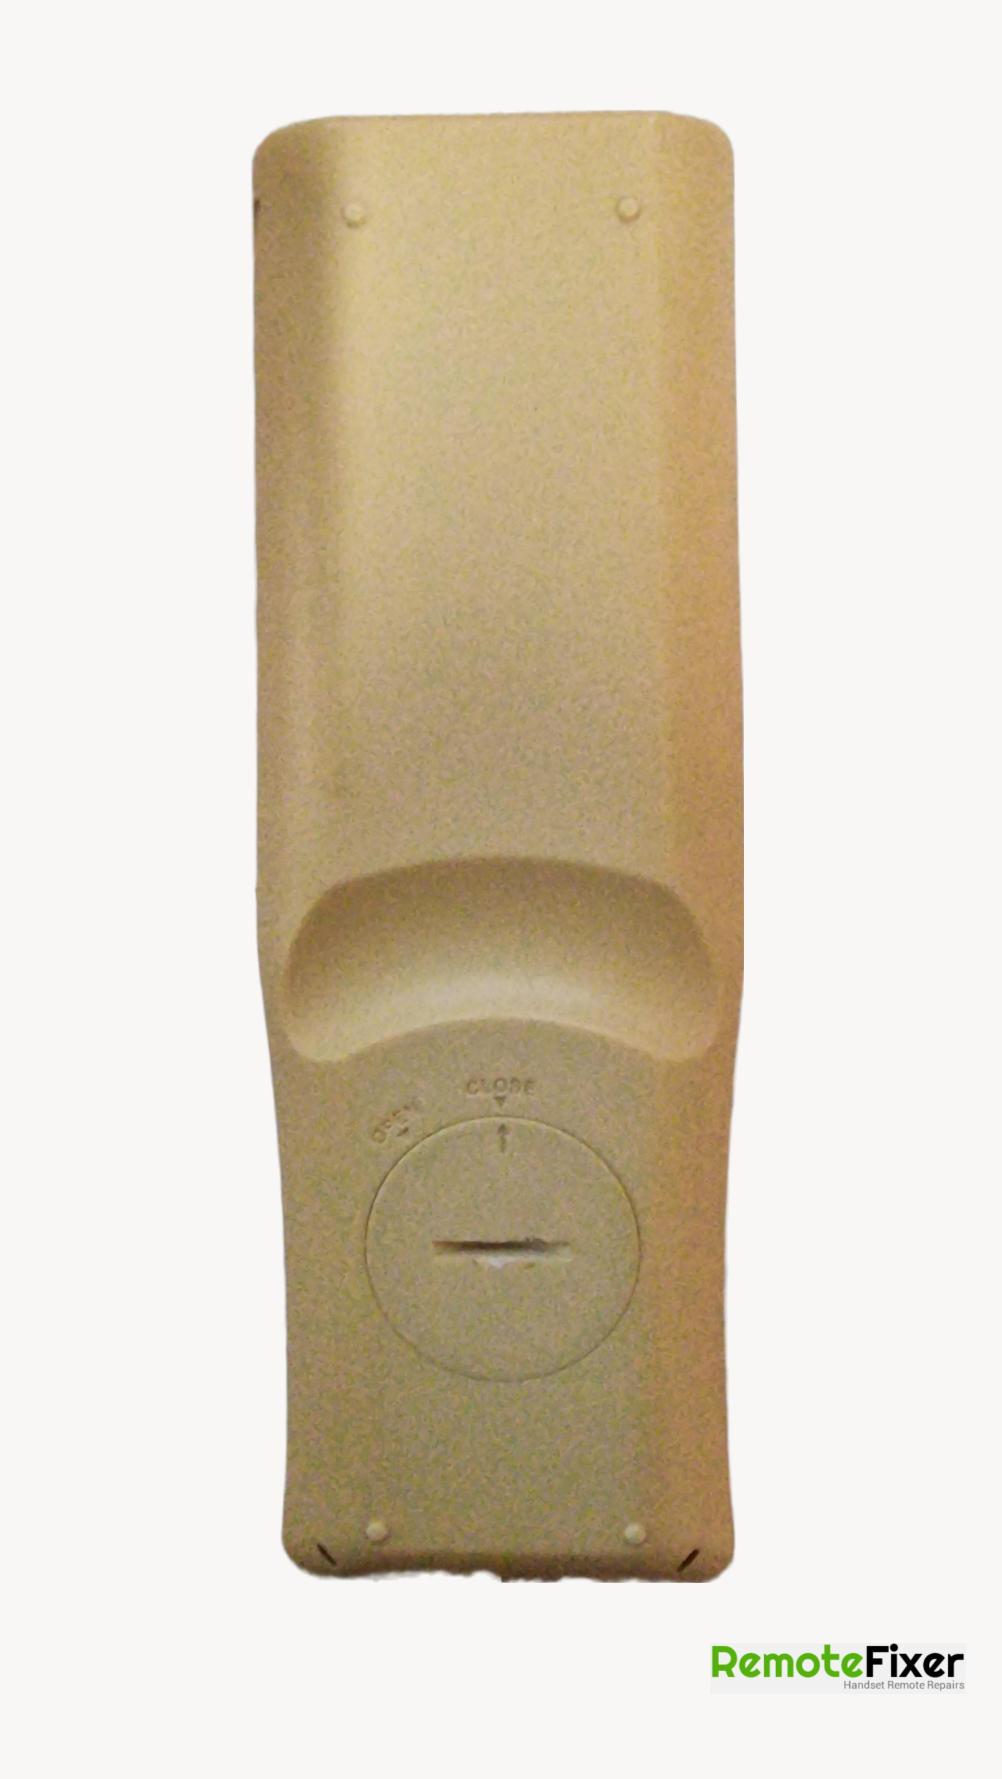 Waview Bathroom TV Remote Control - Back Image